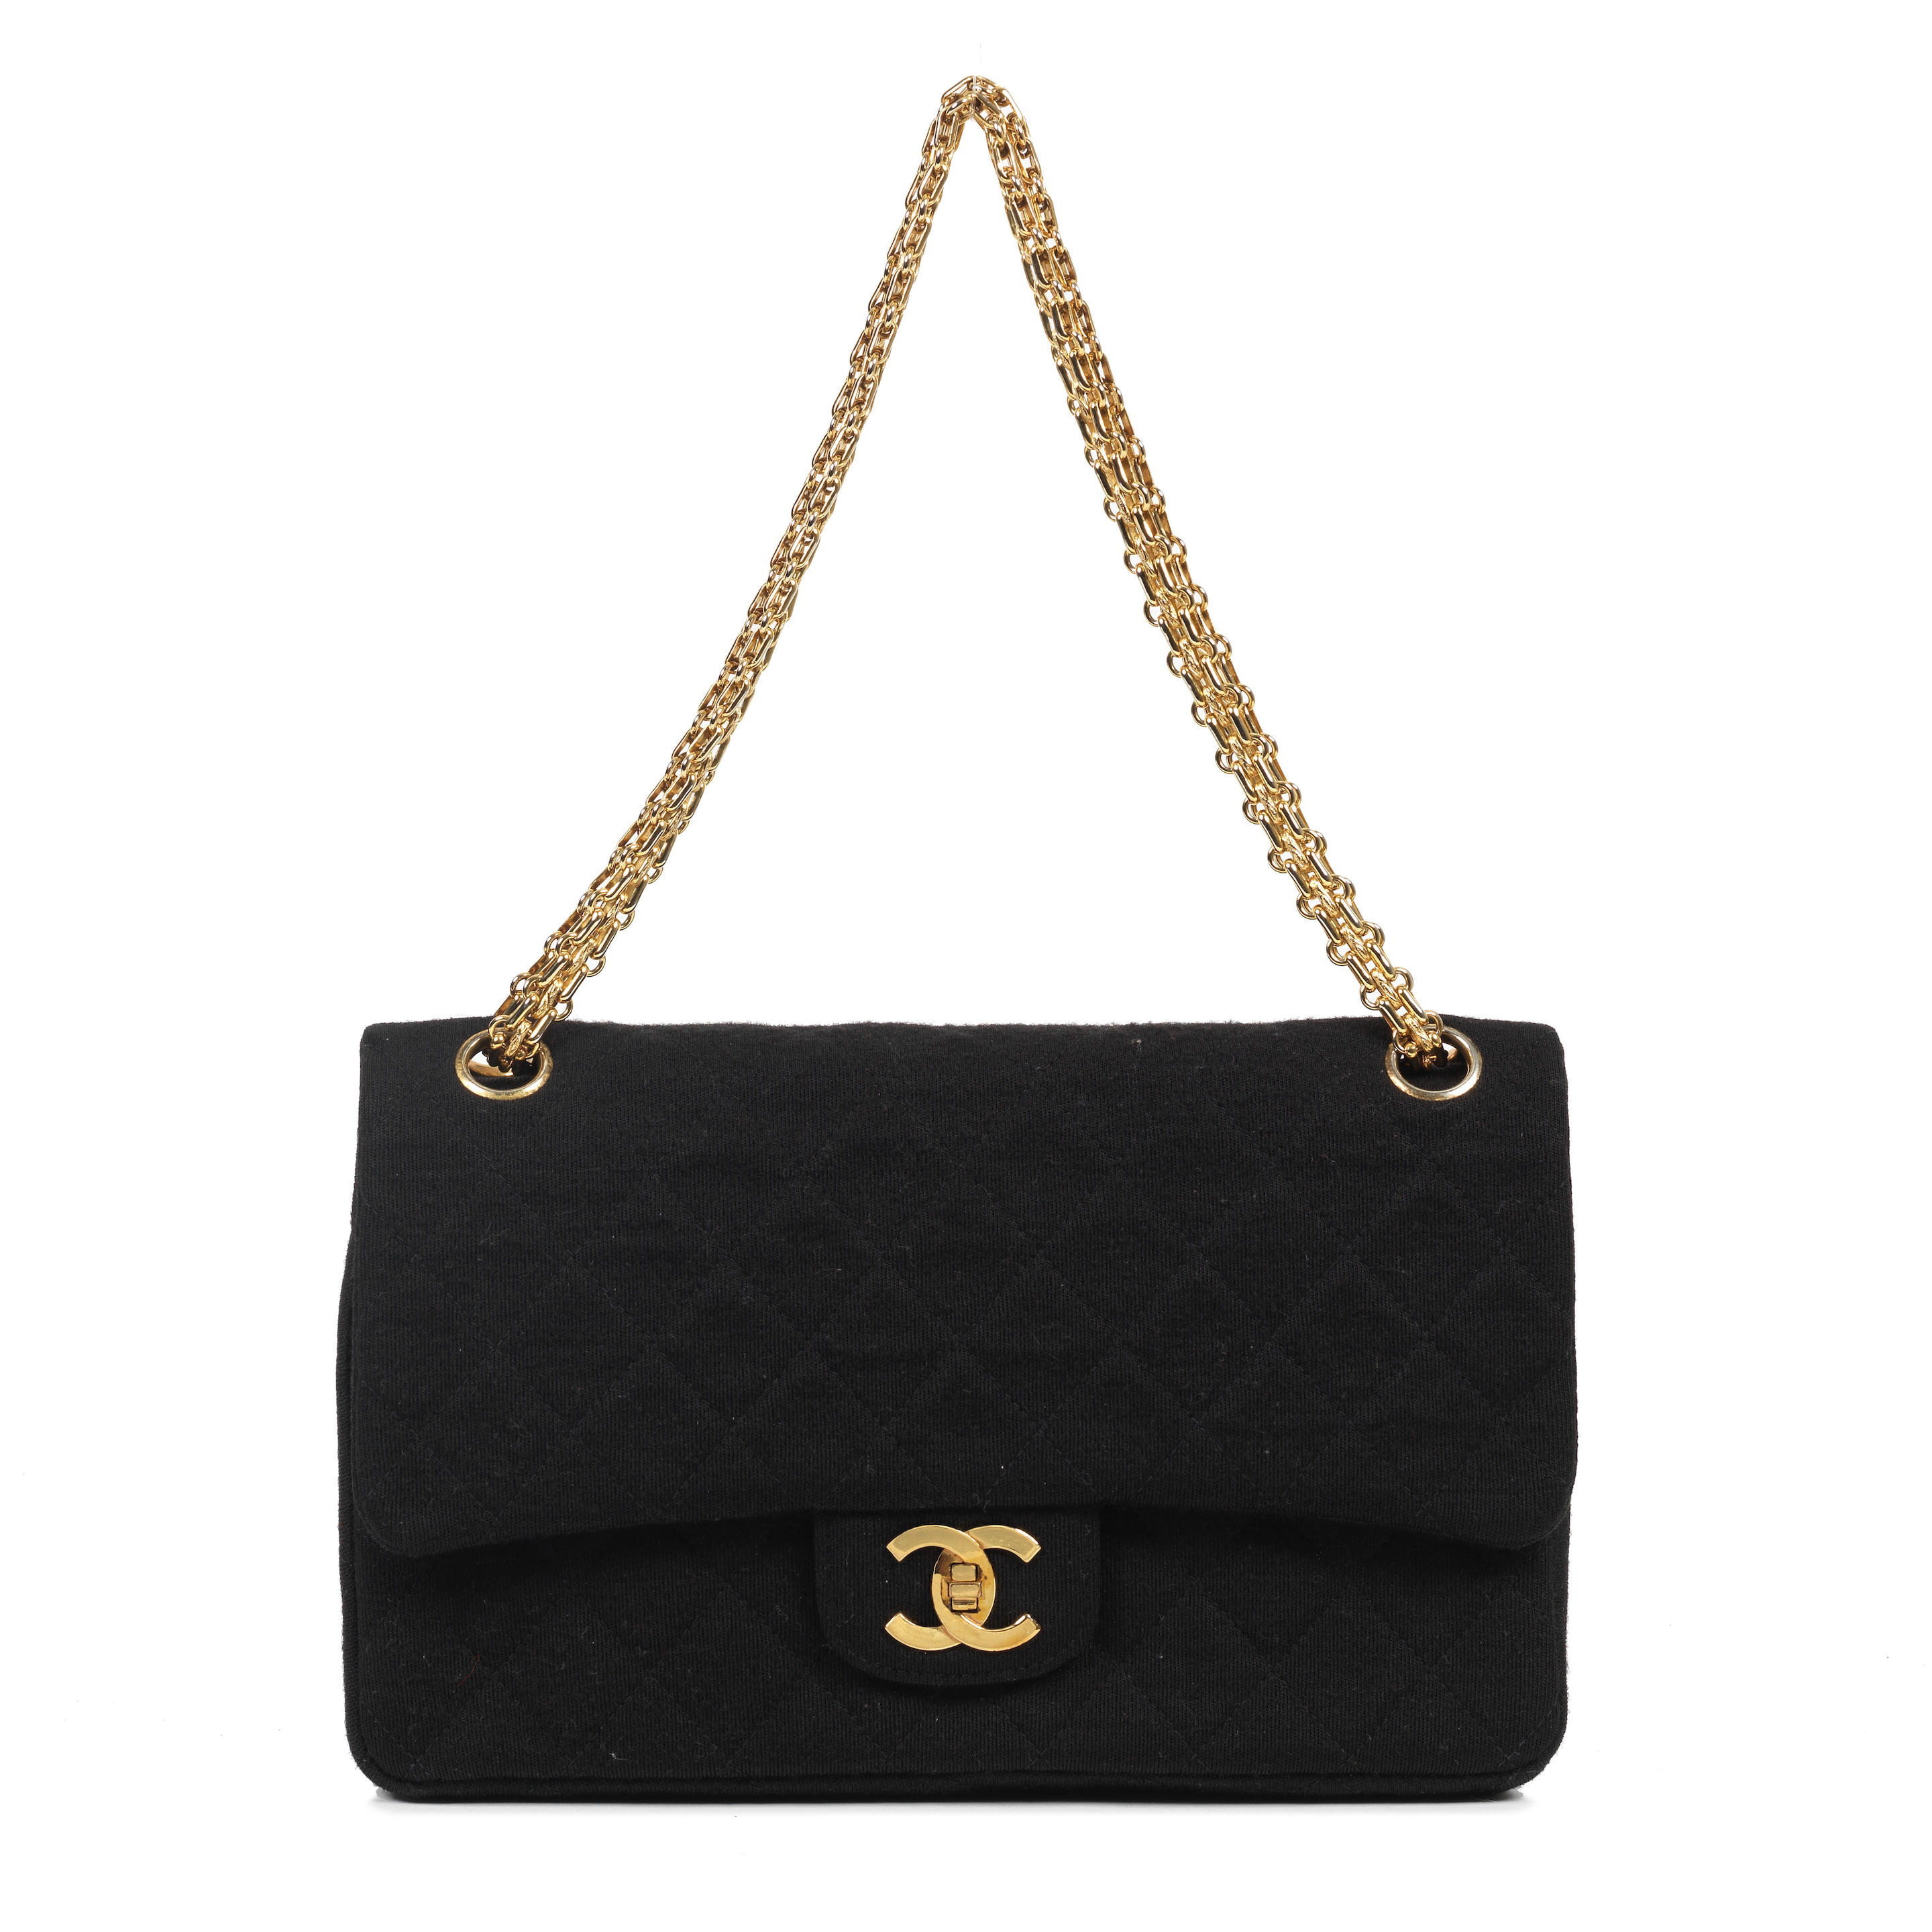 Sold at Auction: Chanel Silk Mini Camellia Classic Flap Shoulder Bag